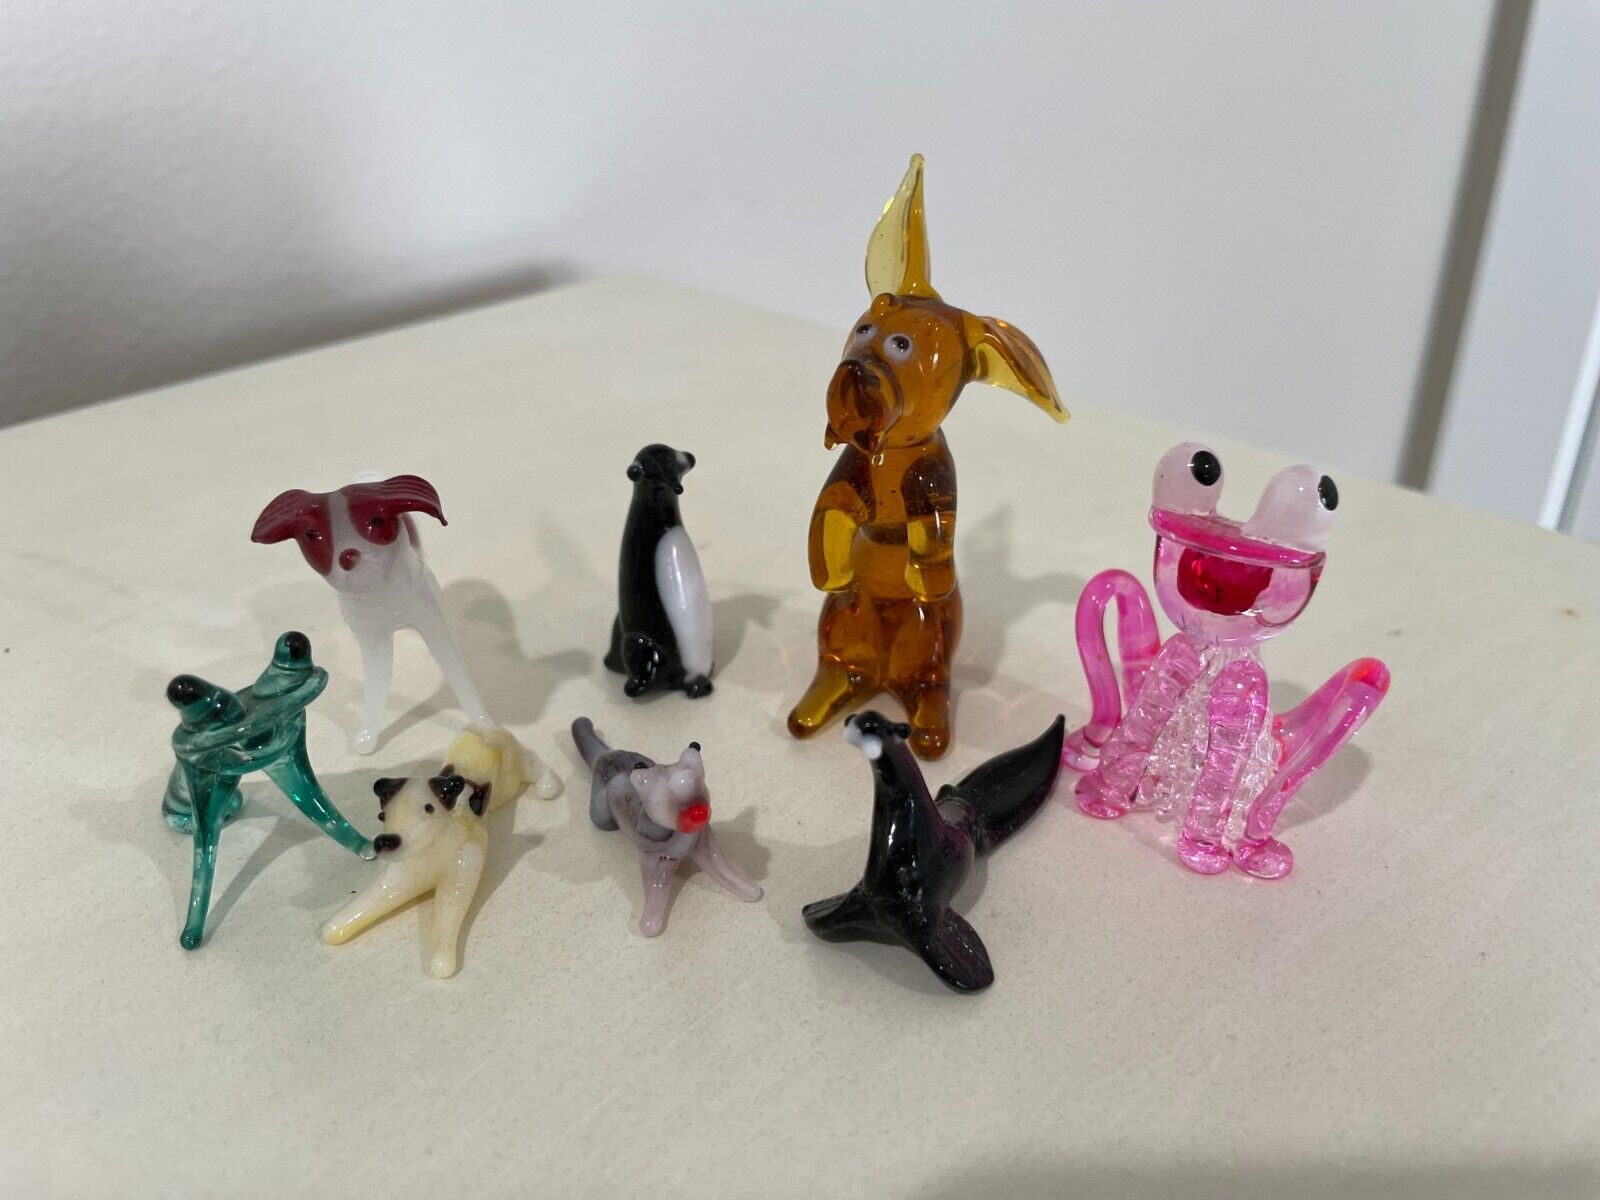 Vintage 1960s Handblown Glass Miniature Animal Figurines: Rabbit, Frogs, Dogs...